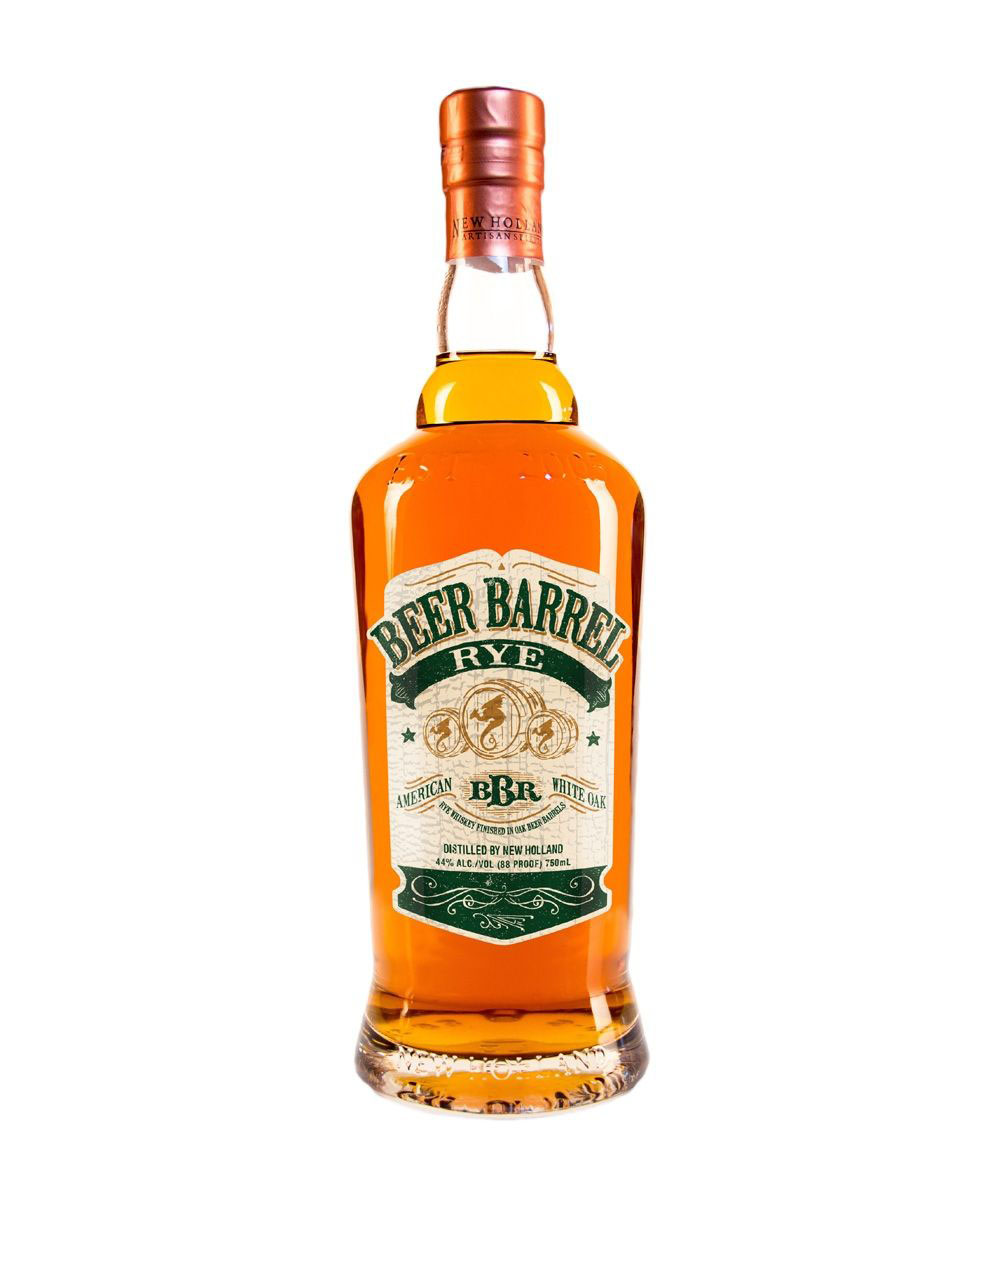 Orphan Barrel Muckety-Muck 24 Year Old Single Grain Scotch Whiskey